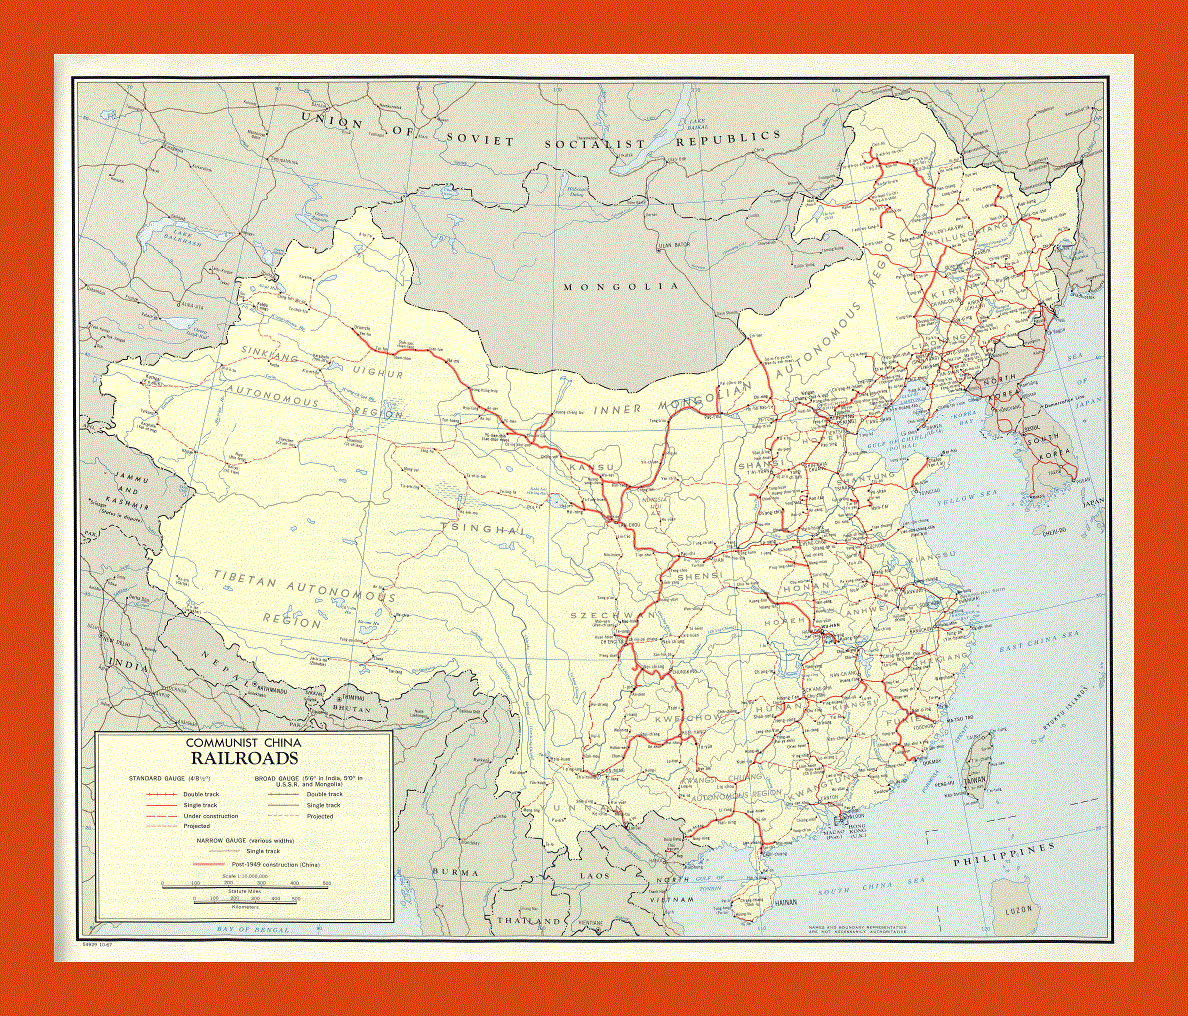 Railroads map of Communist China - 1967